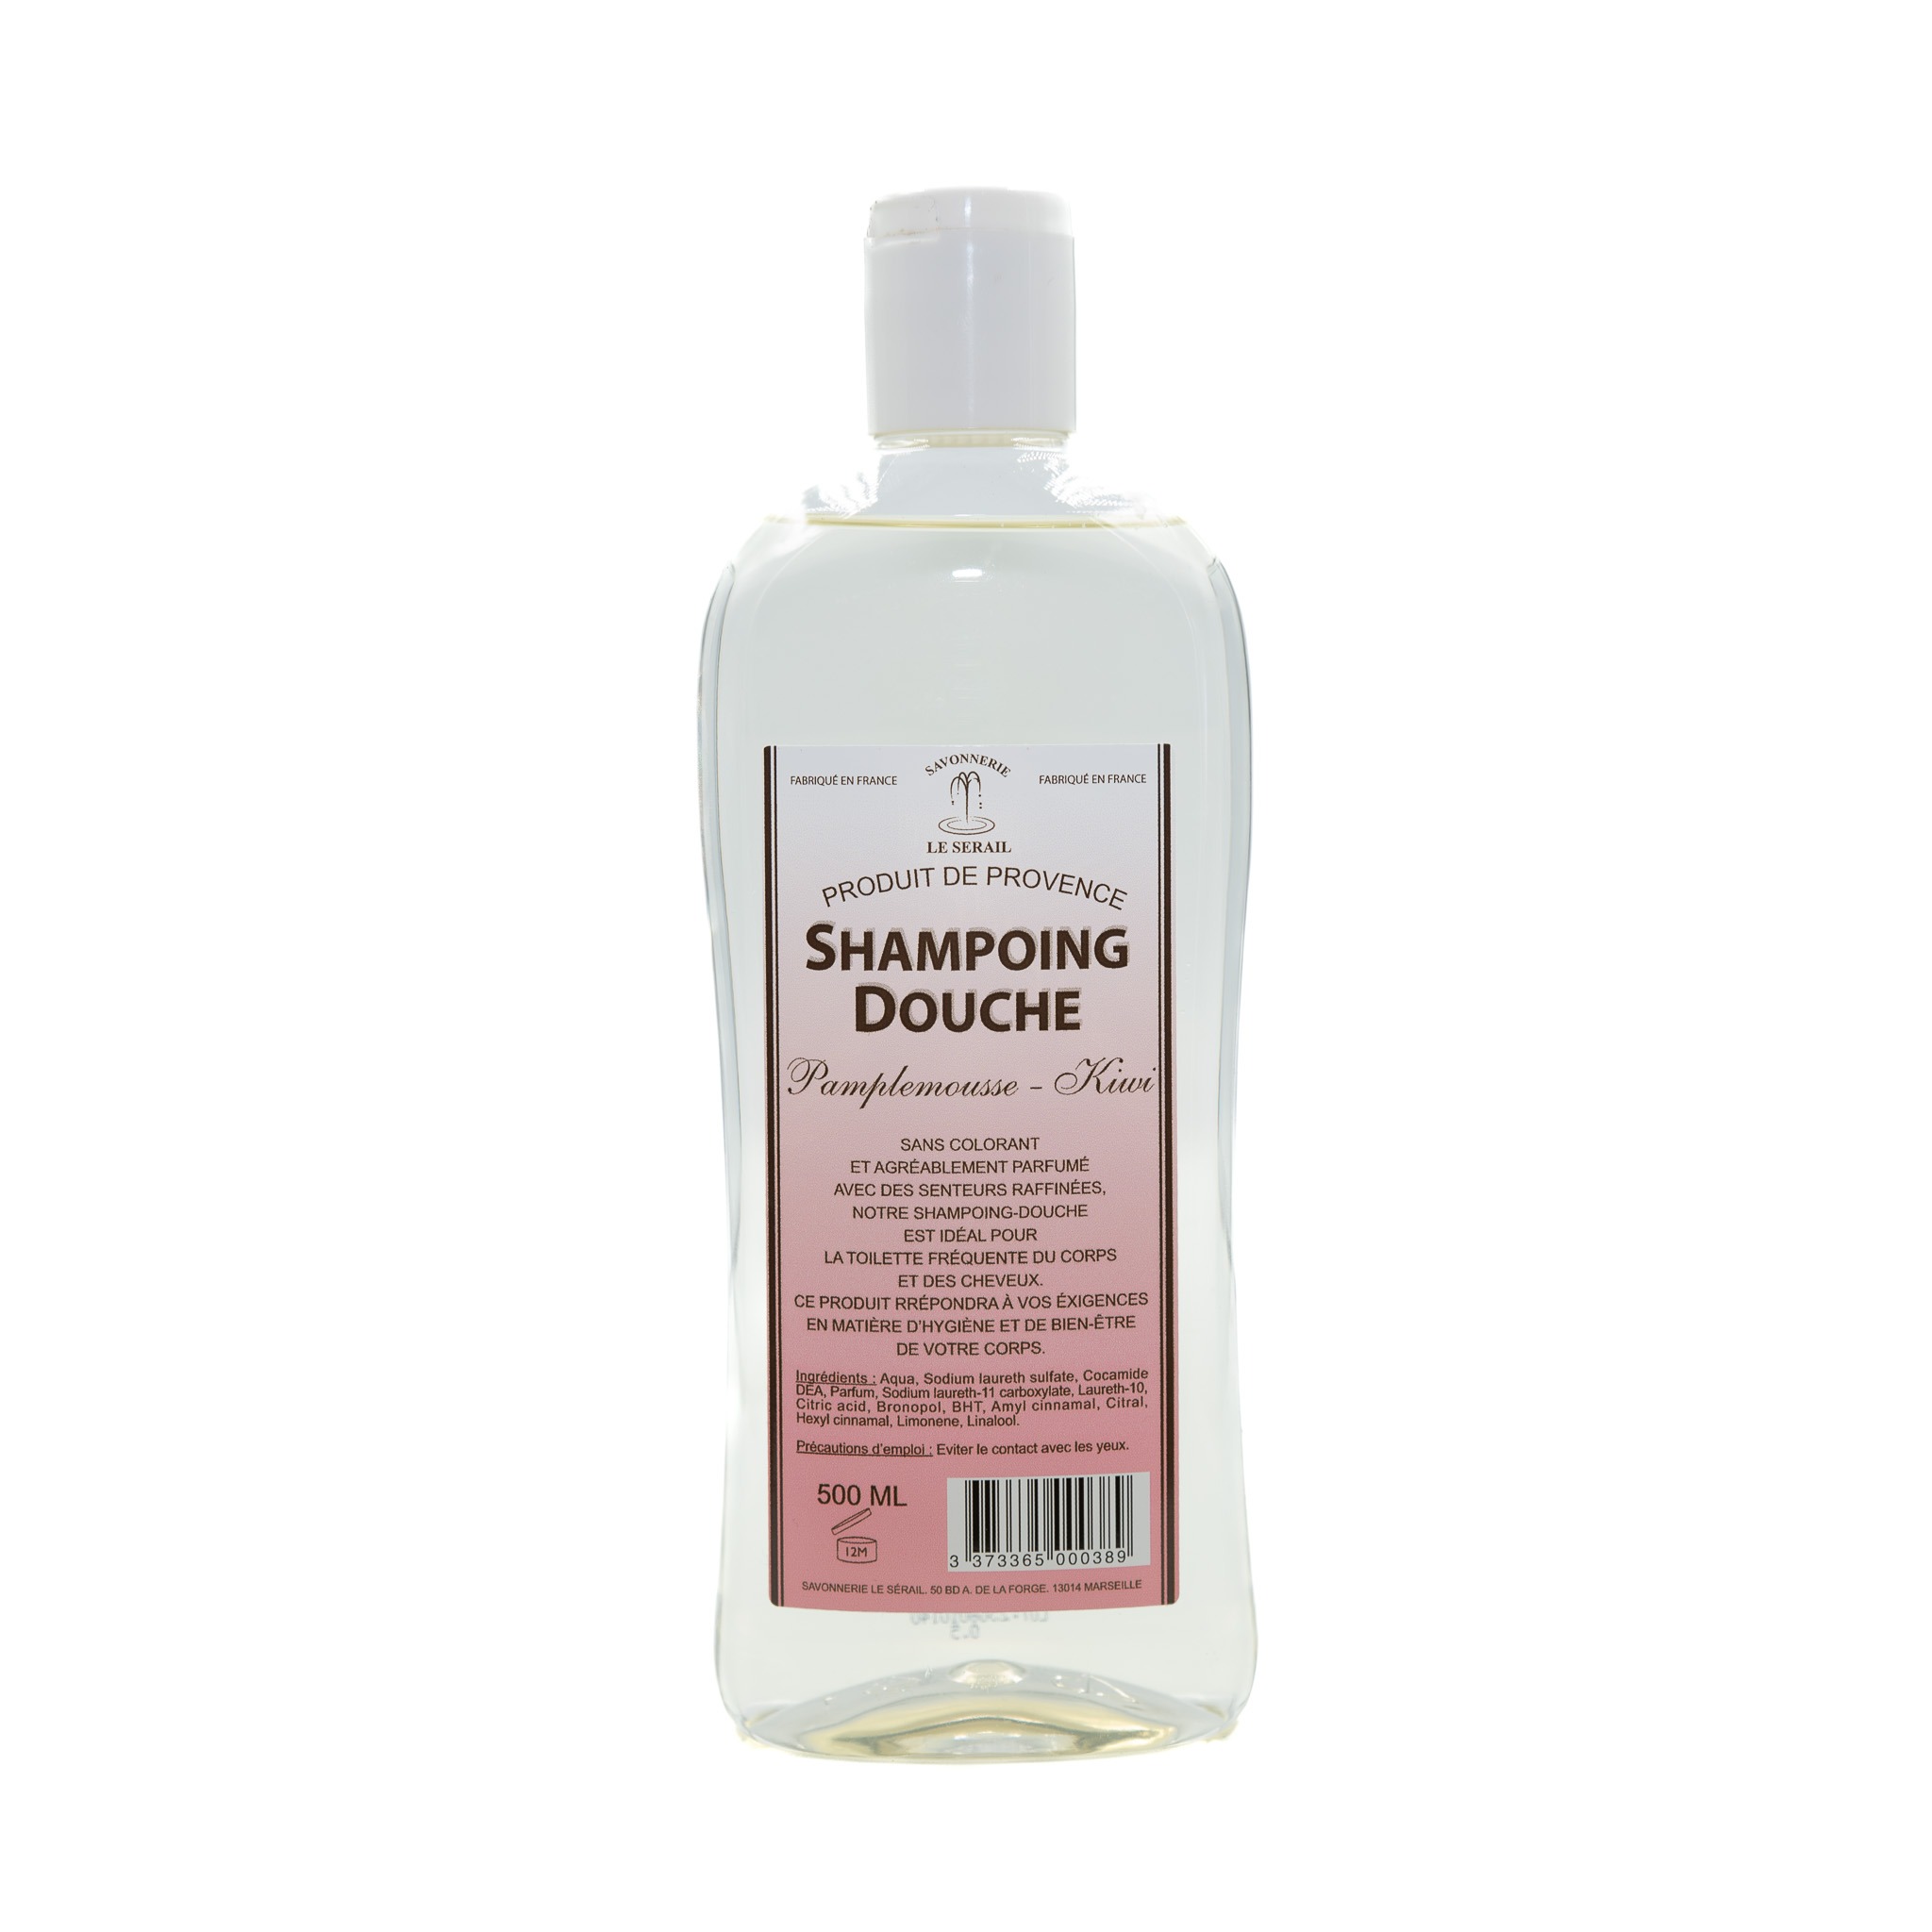 Shampoing douche Pamplemousse-Kiwi 500 ml